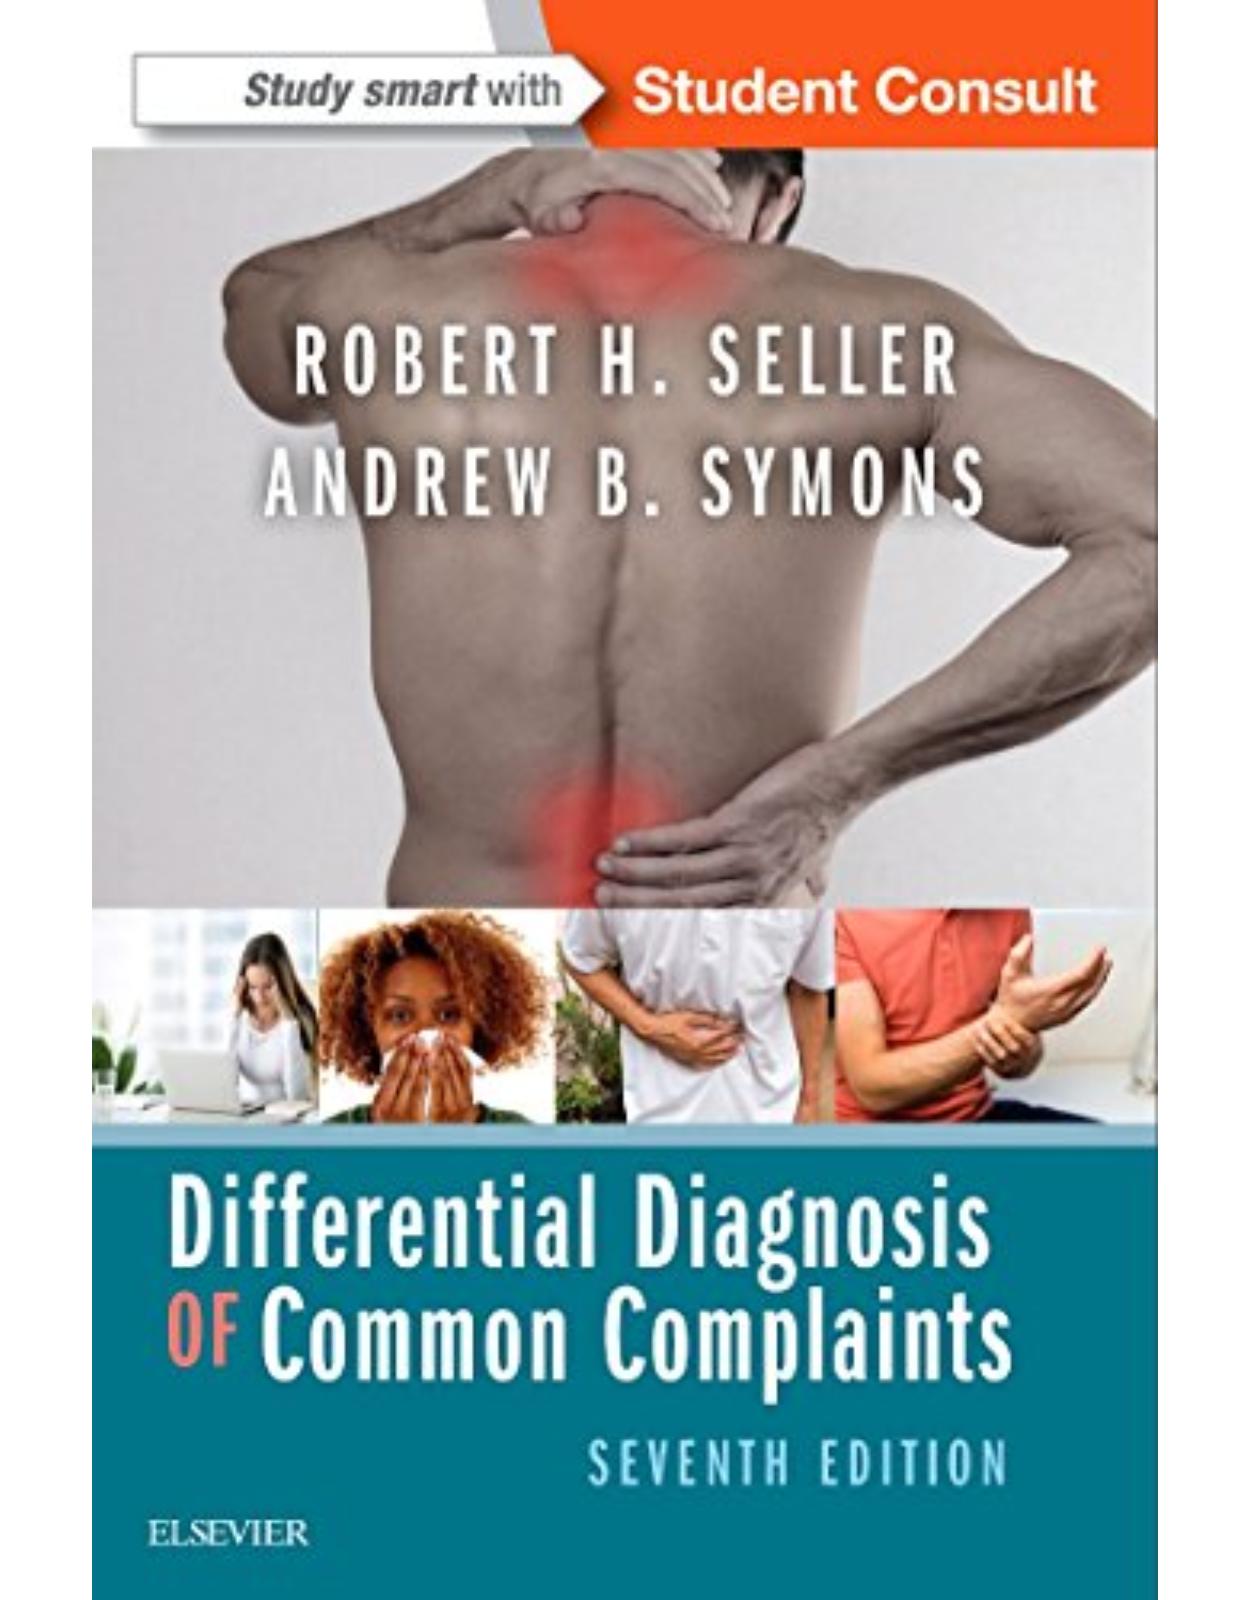 Differential Diagnosis of Common Complaints, 7e